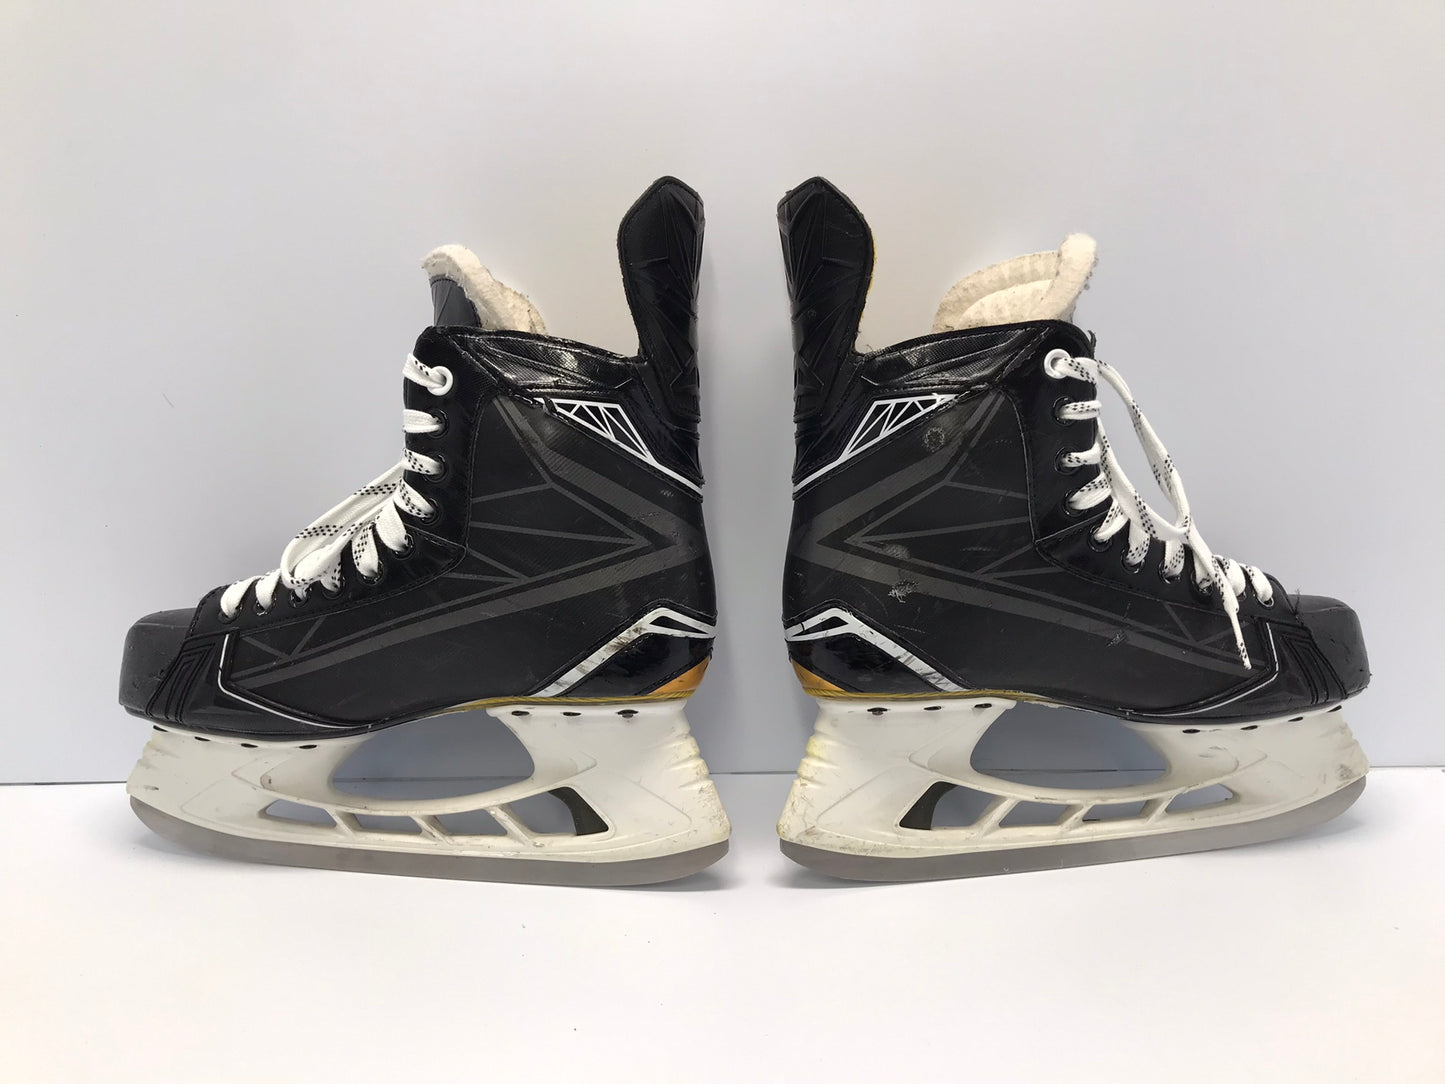 Hockey Skates Men's Size 9 Shoe Size Bauer Supreme S170 Minor Wear